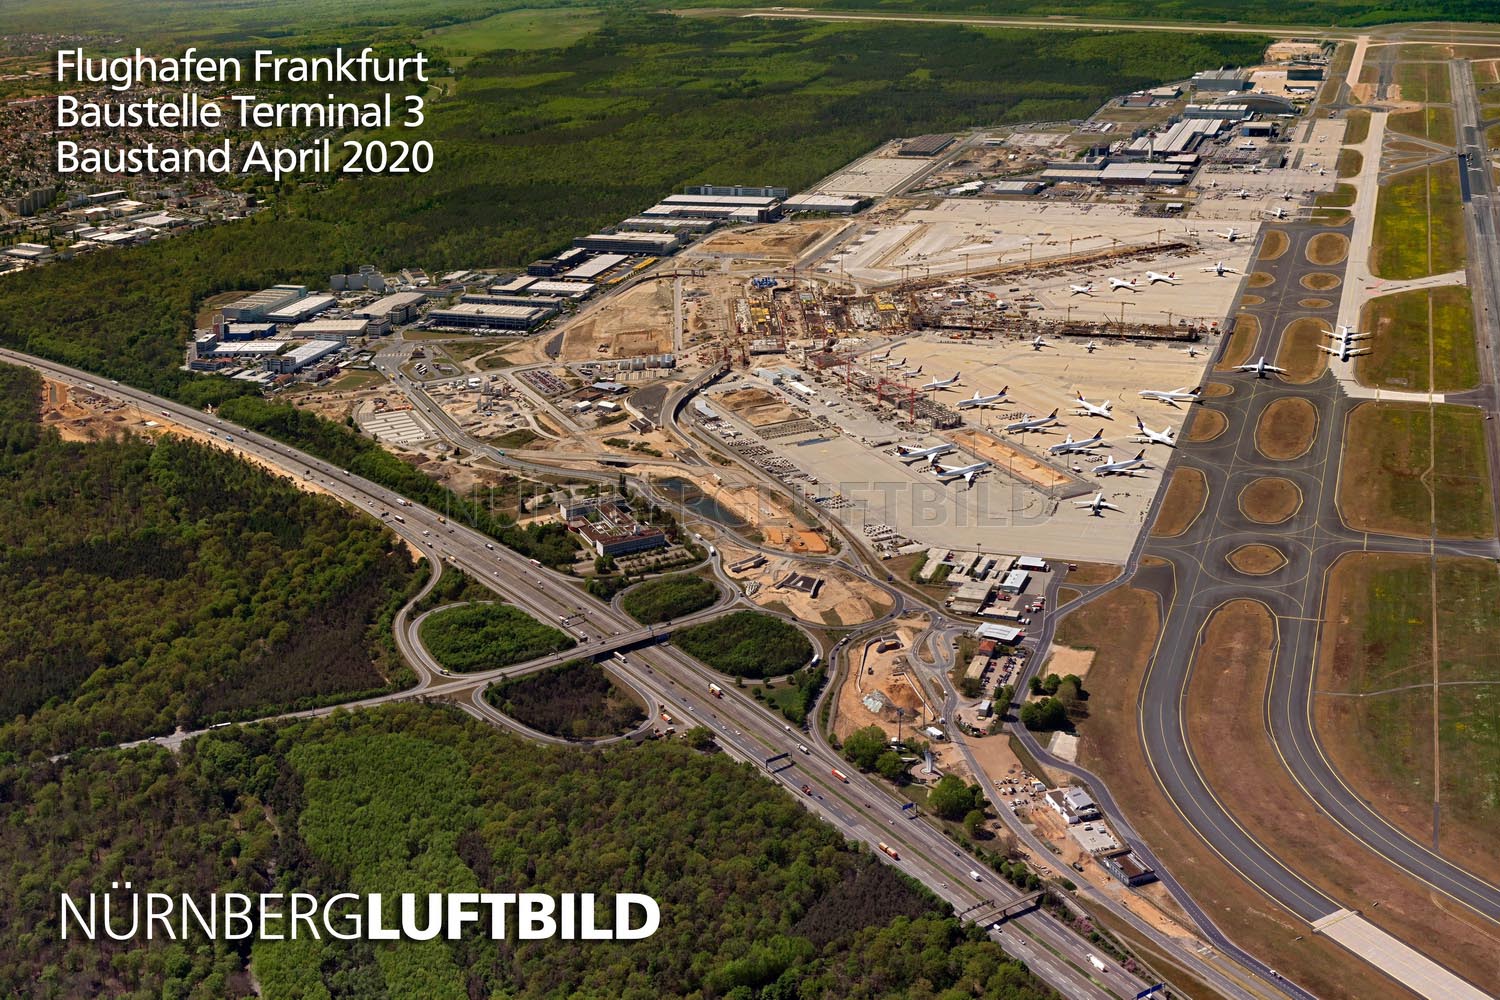 Flughafen Frankfurt, Baustelle Terminal 3, Baustand April 2020